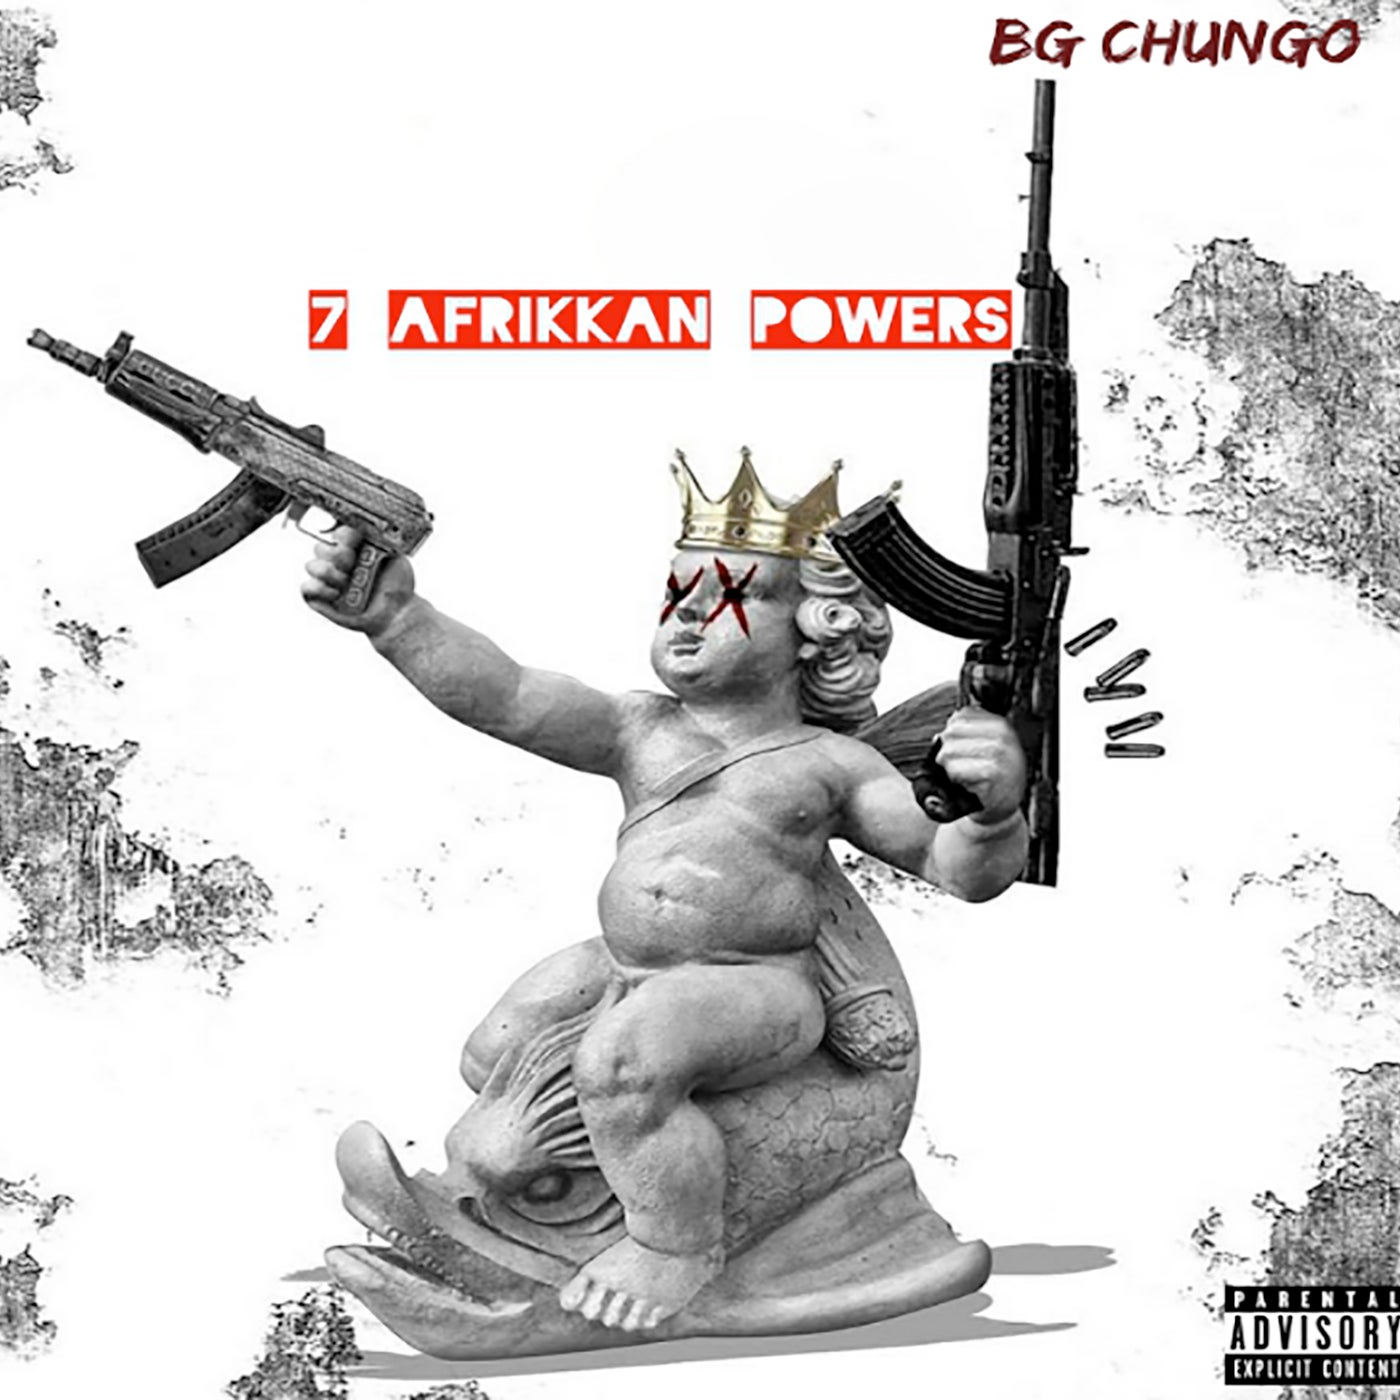 7 Afrikkan Powers